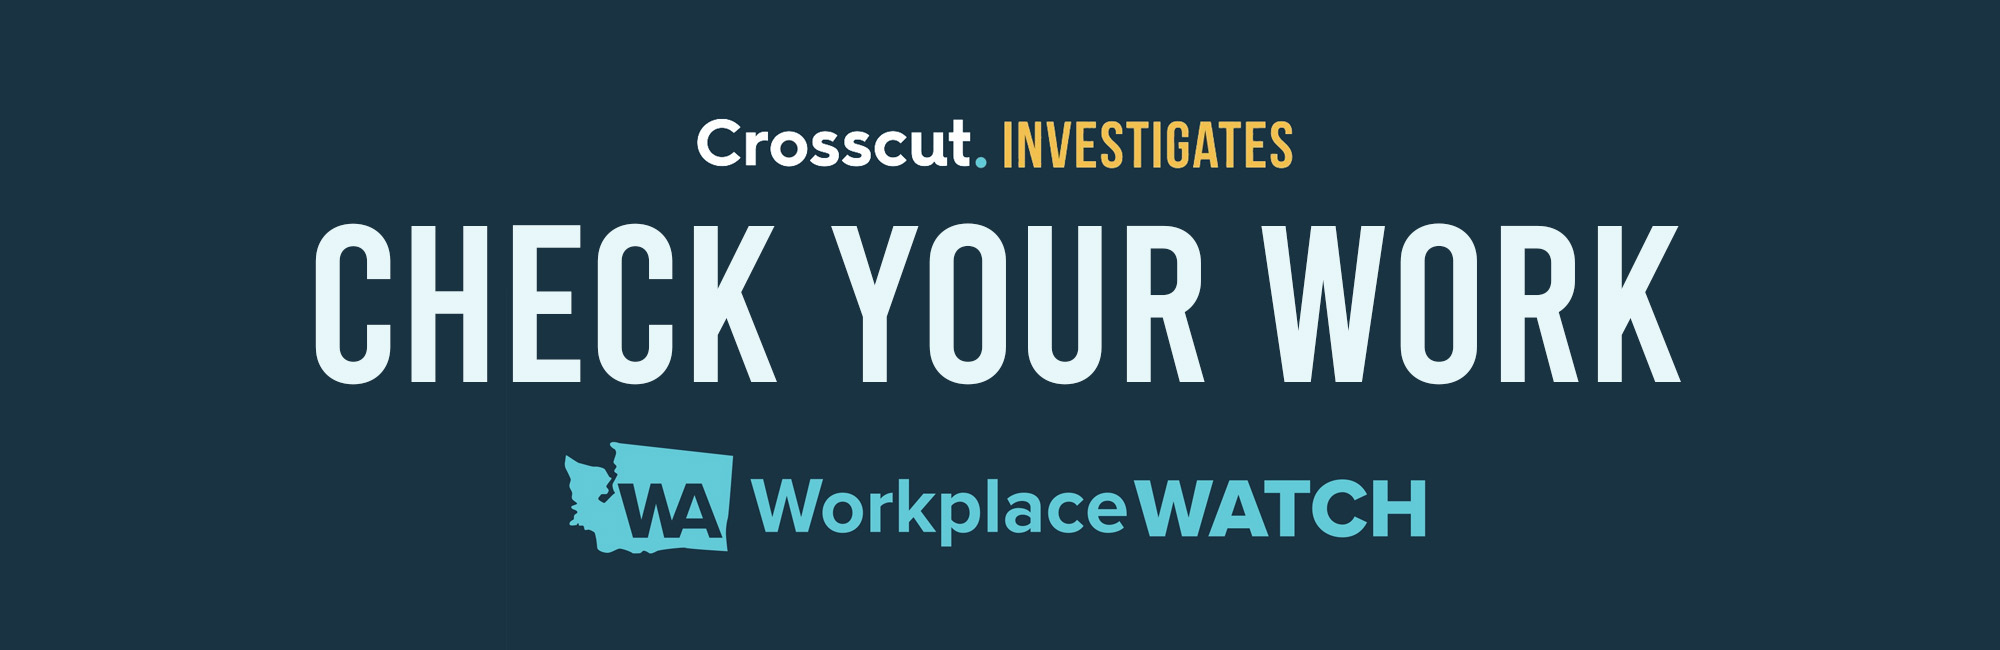 Washington Workplace Watch: Check your work